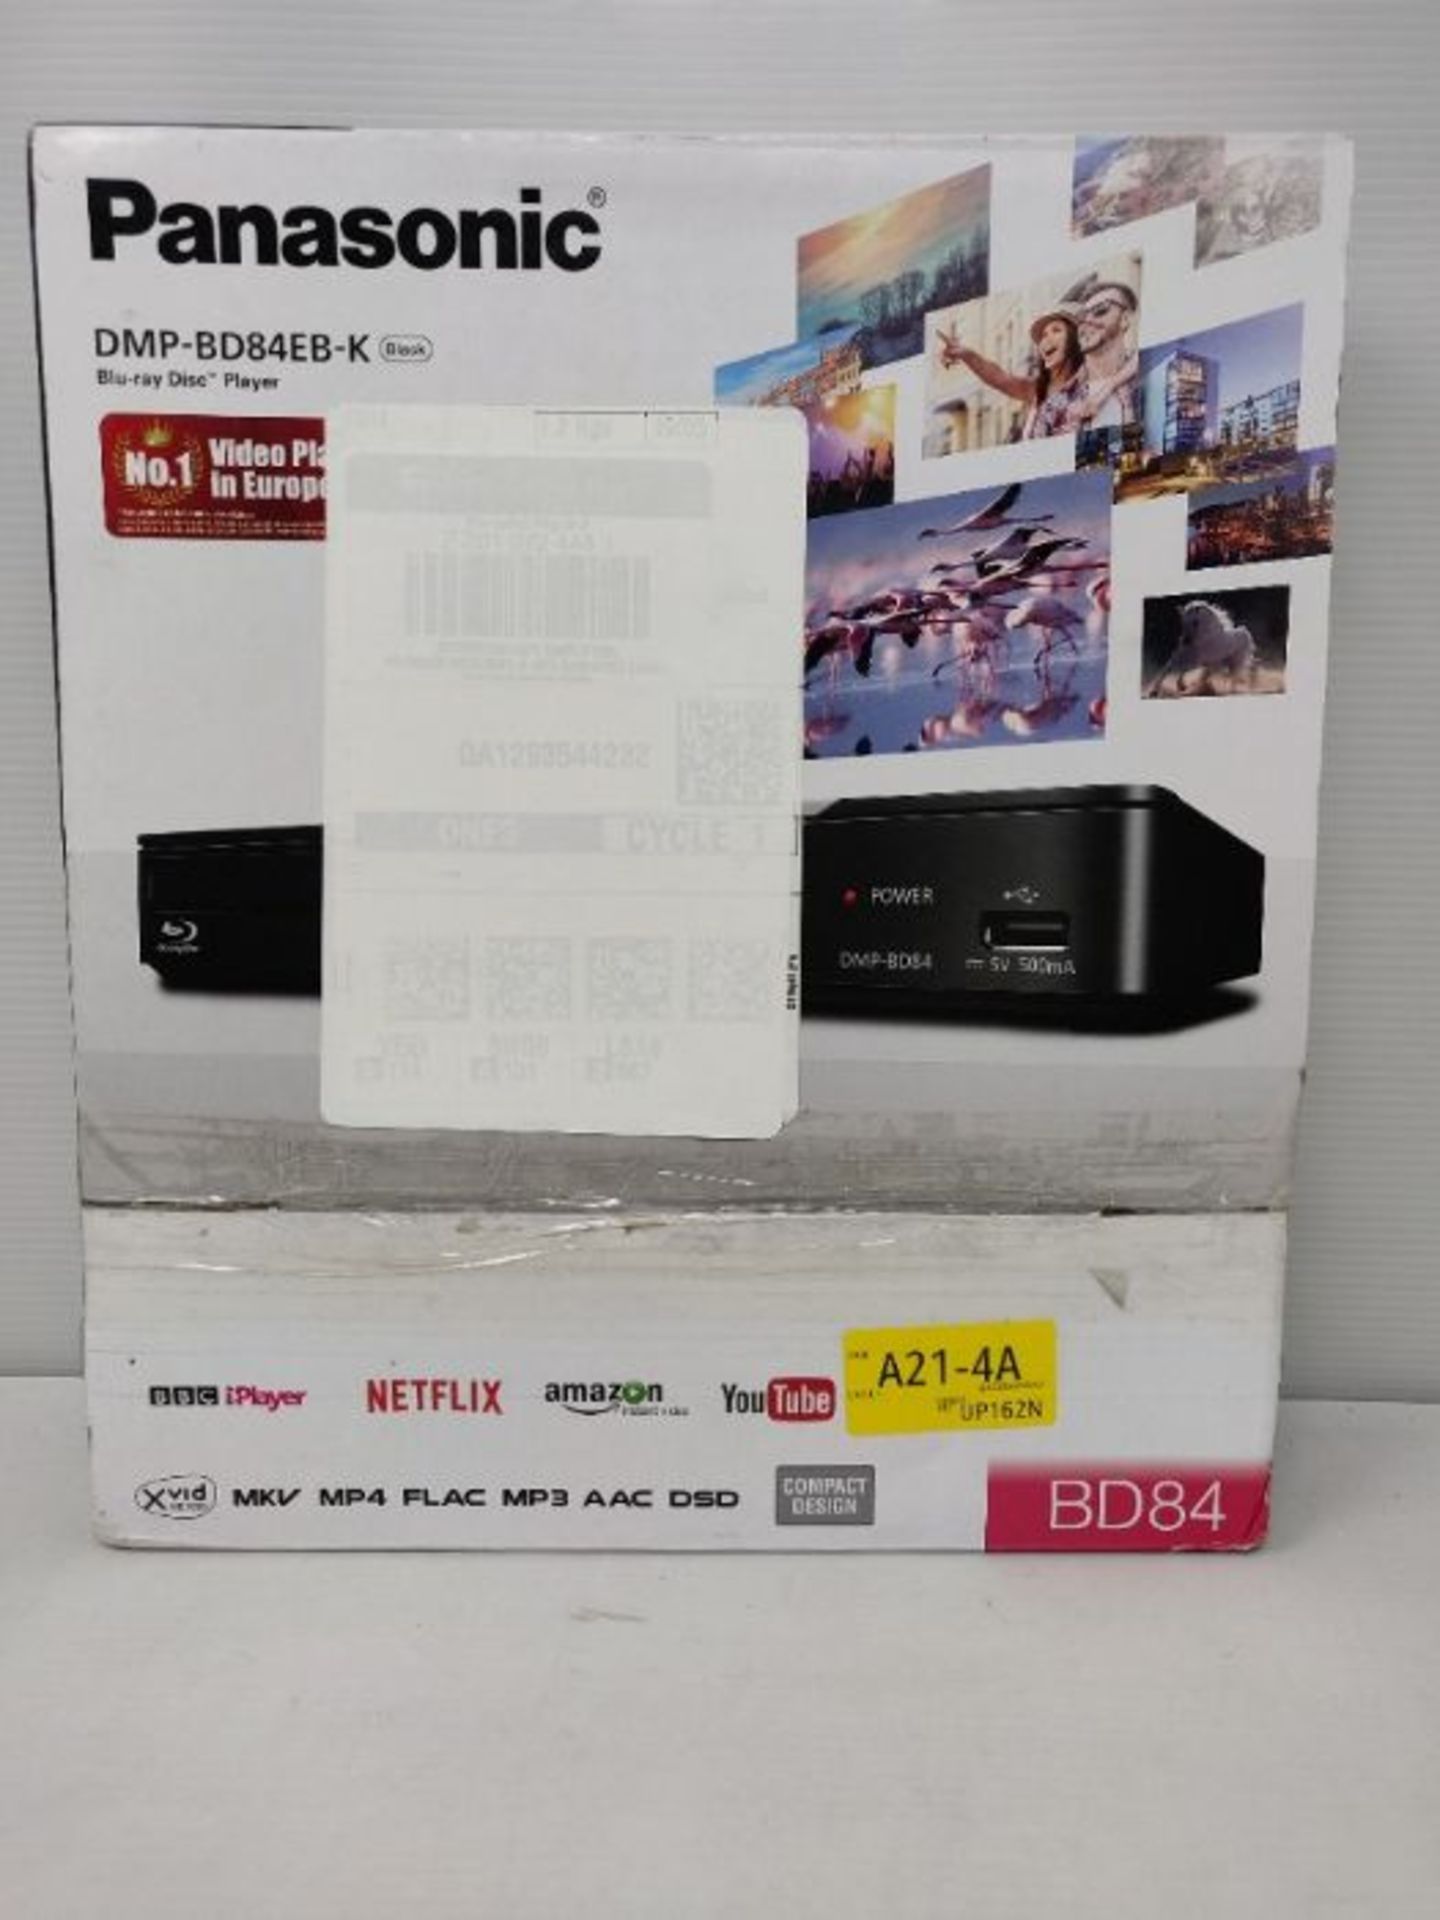 RRP £59.00 Panasonic DMP-BD84EB-K Smart Network 2D Blu-ray Disc/DVD Player - Black - Image 2 of 3